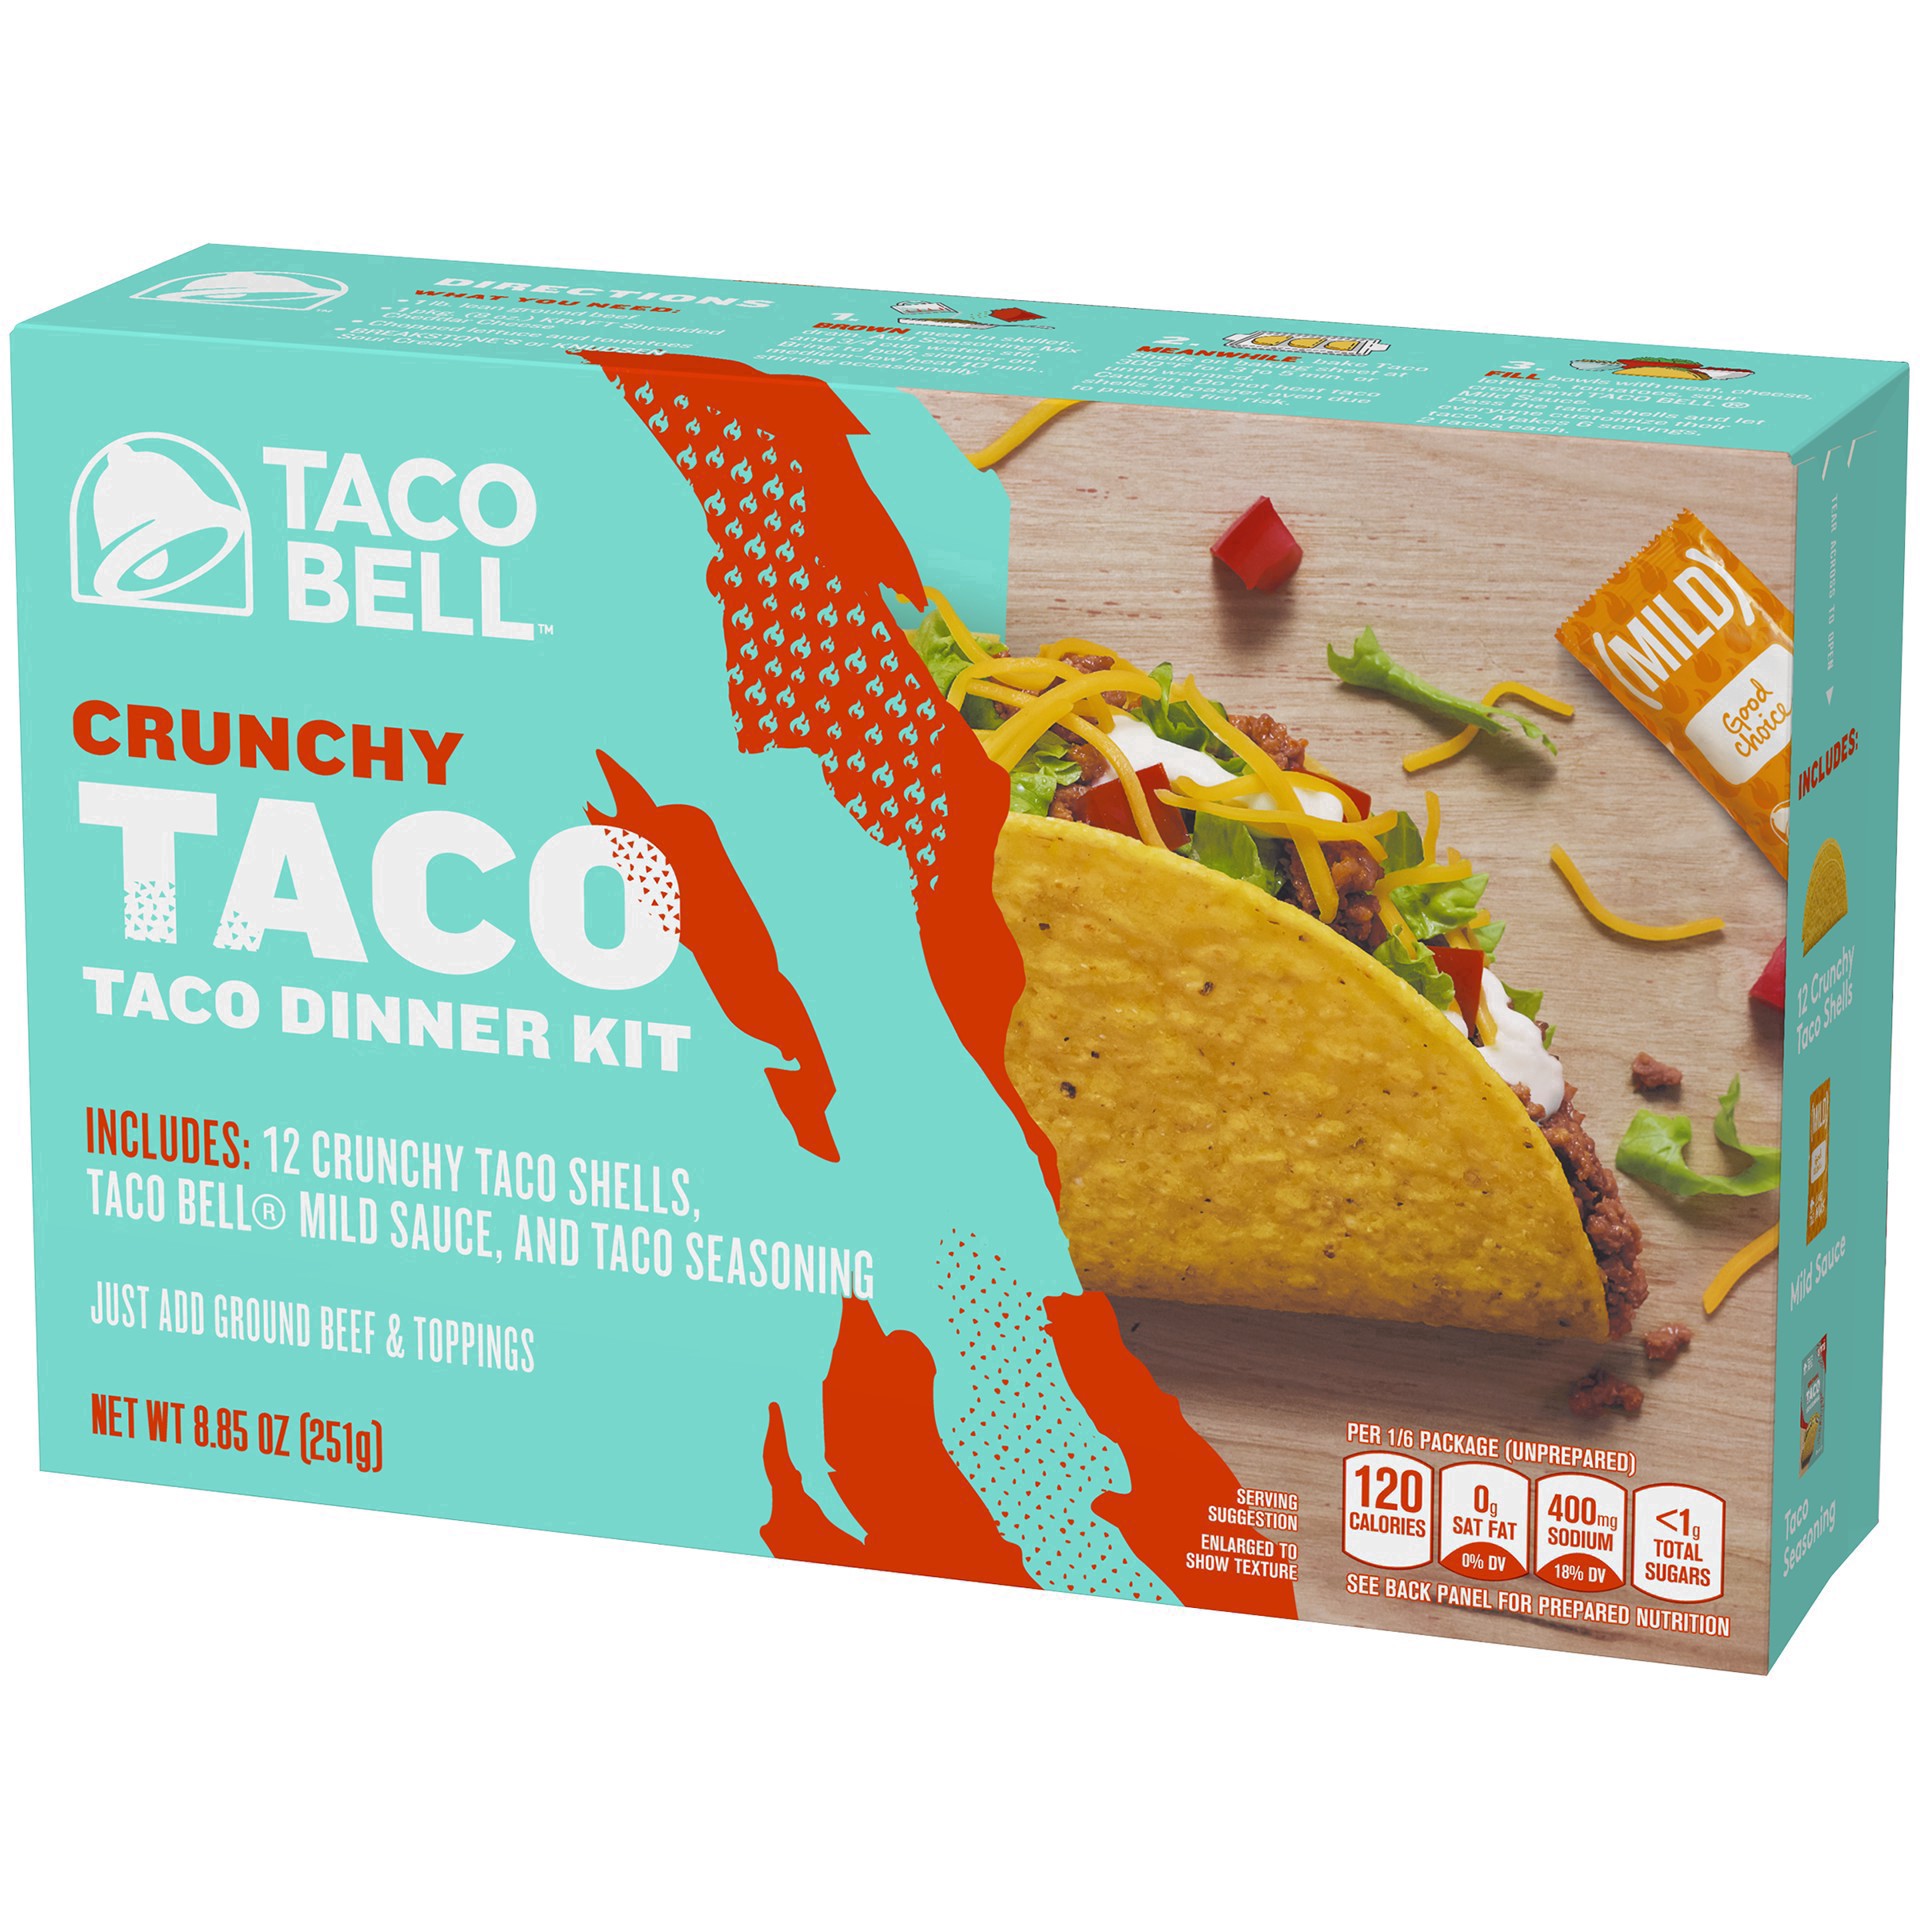 slide 6 of 91, Taco Bell Crunchy Taco Cravings Kit with 12 Crunchy Taco Shells, Taco Bell Mild Sauce & Seasoning, 8.85 oz Box, 1 ct